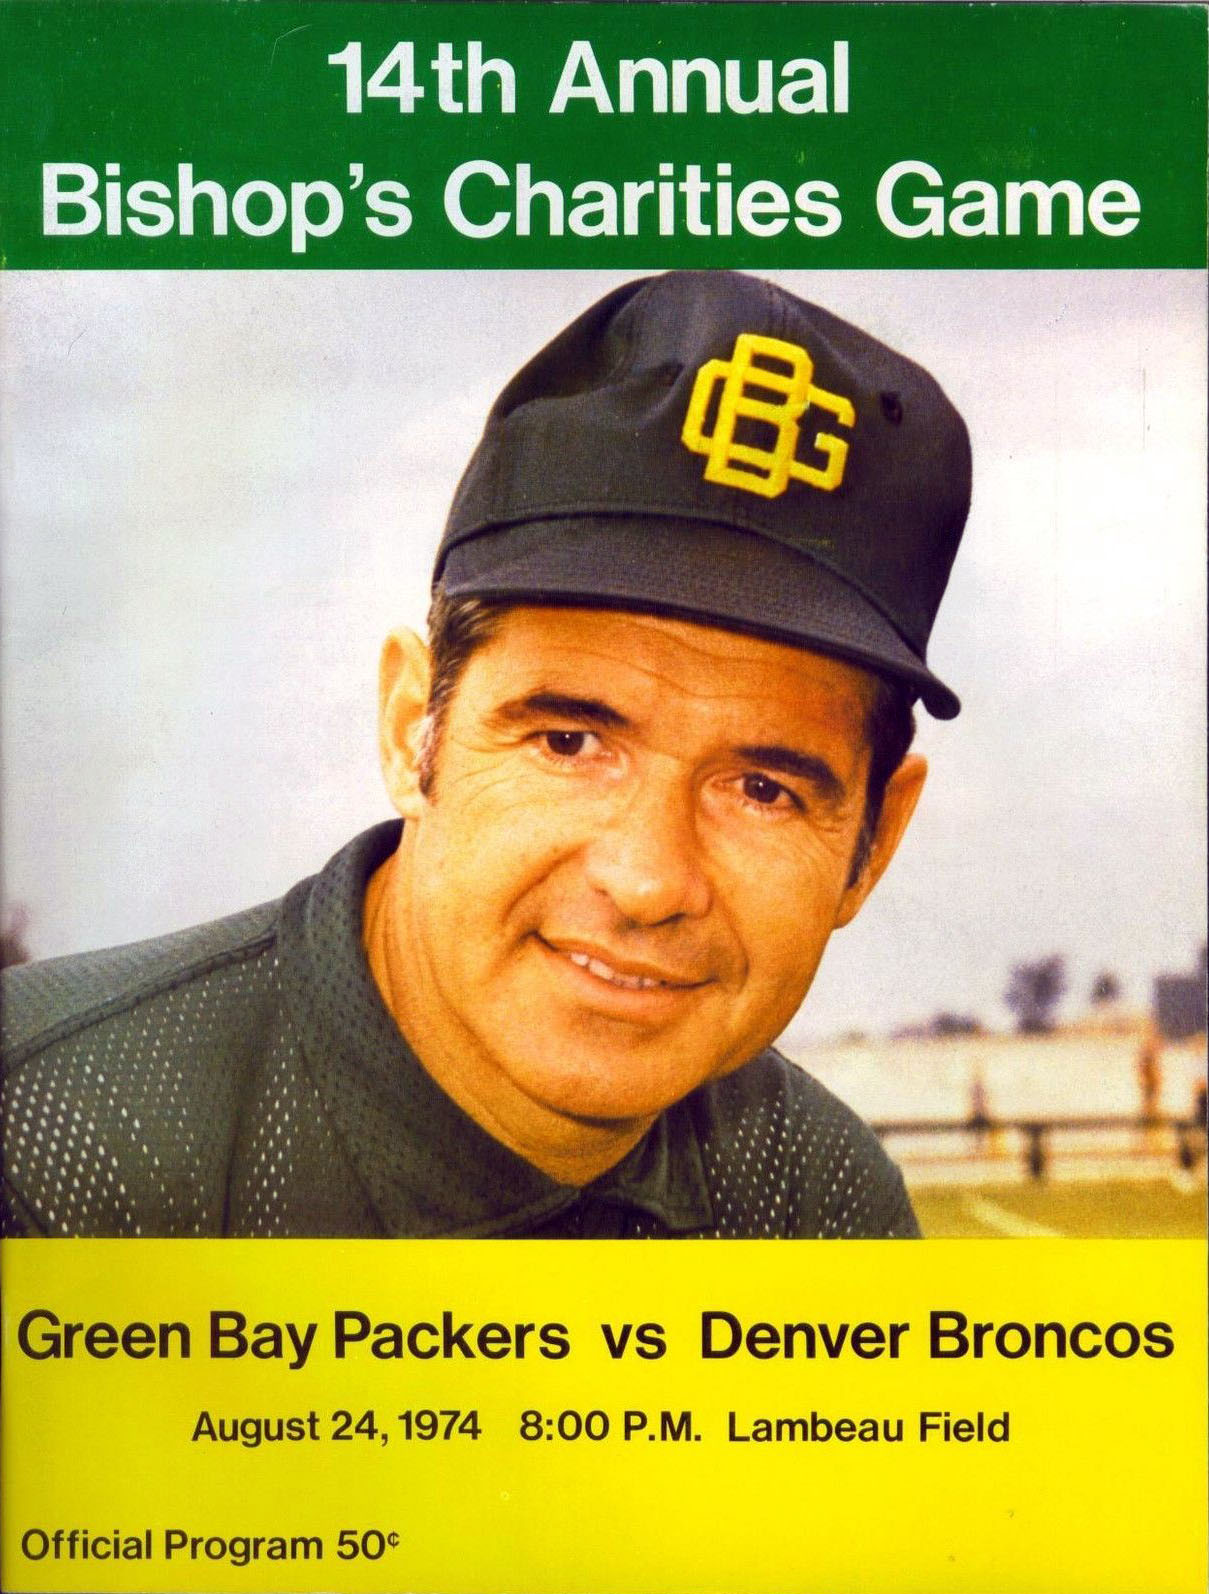 Green Bay Packers vs. Denver Broncos (August 24, 1974)